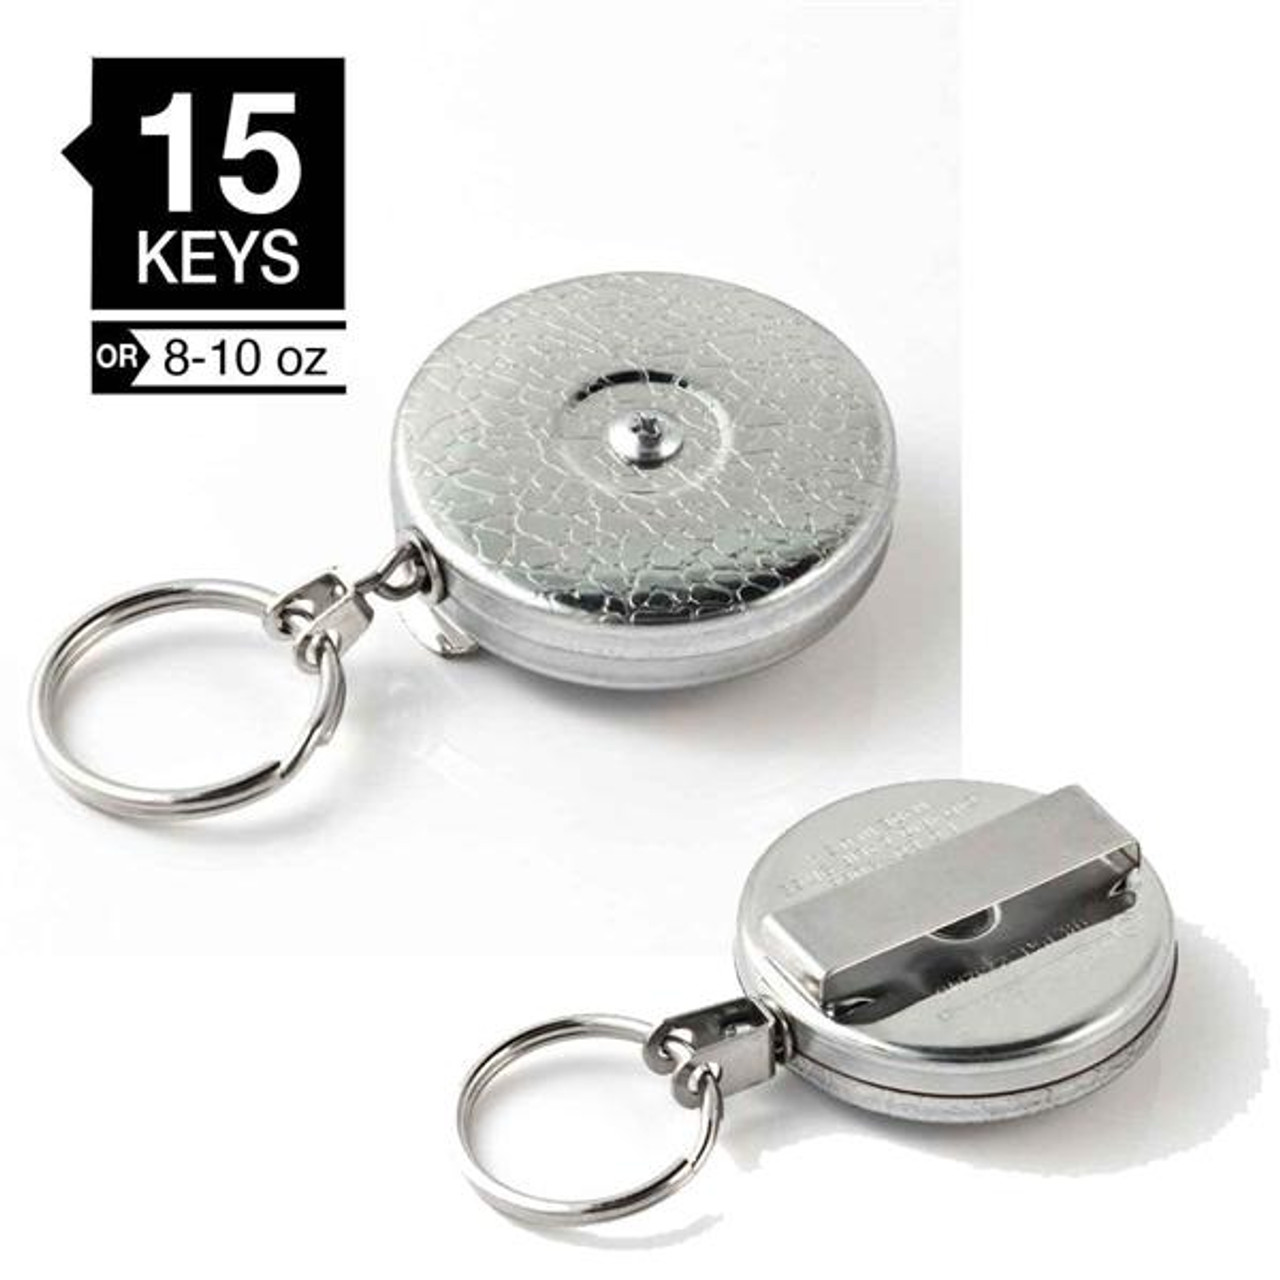 Shop for and Buy Key-Bak Model #3 Key Retractor Slip Thru Belt 24